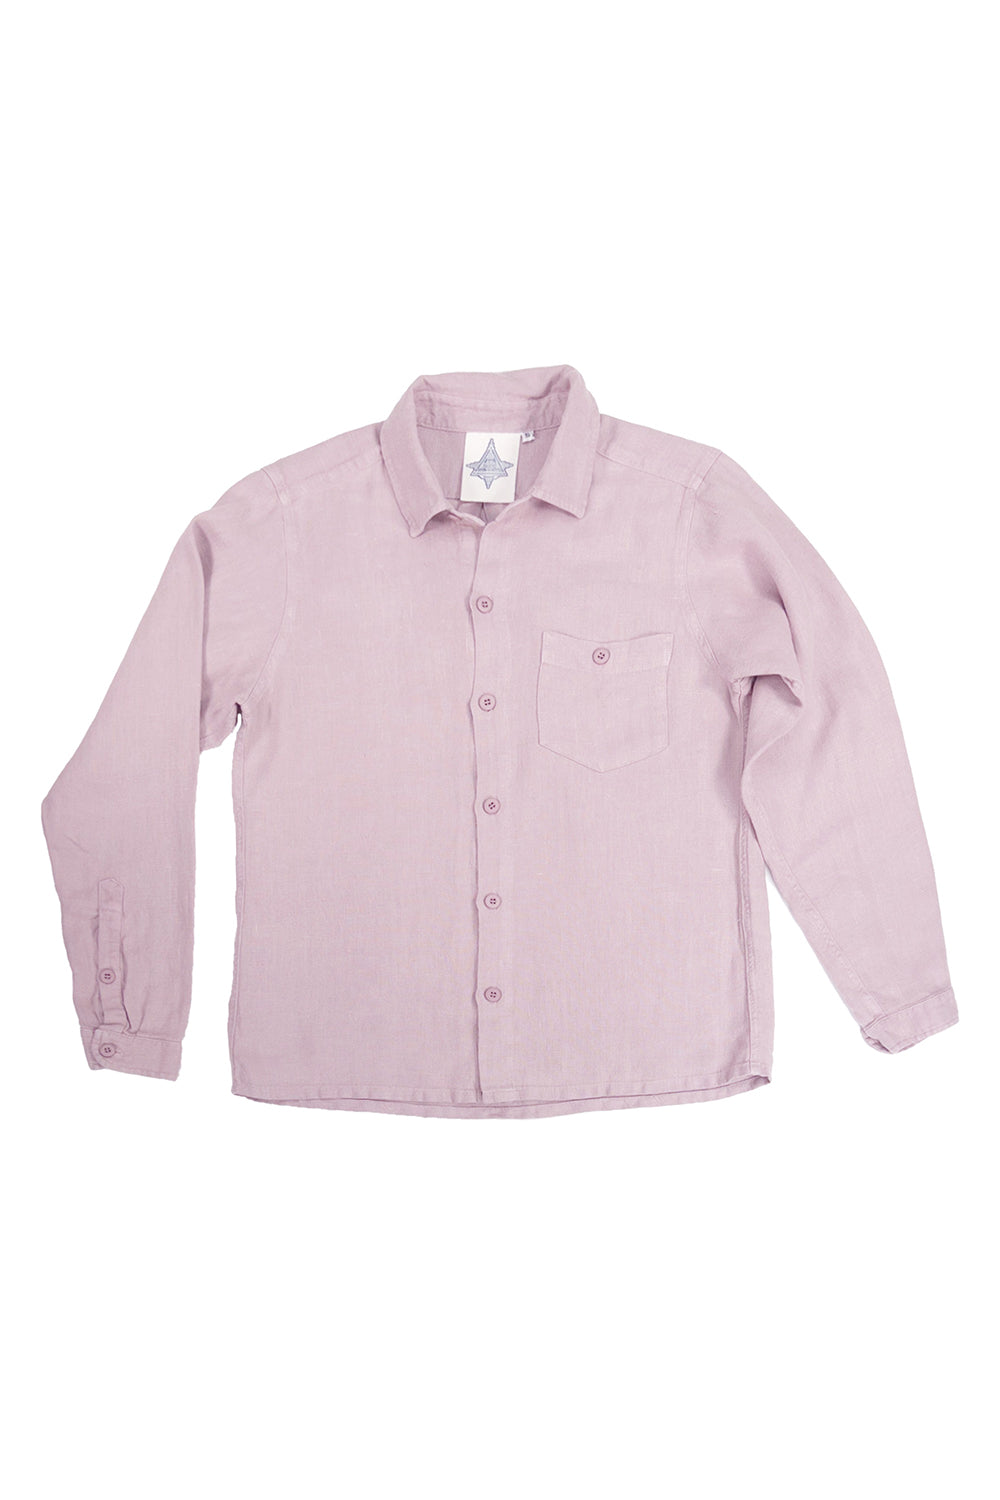 Lassen 100% Hemp Shirt | Jungmaven Hemp Clothing & Accessories / Color: Rose Quartz